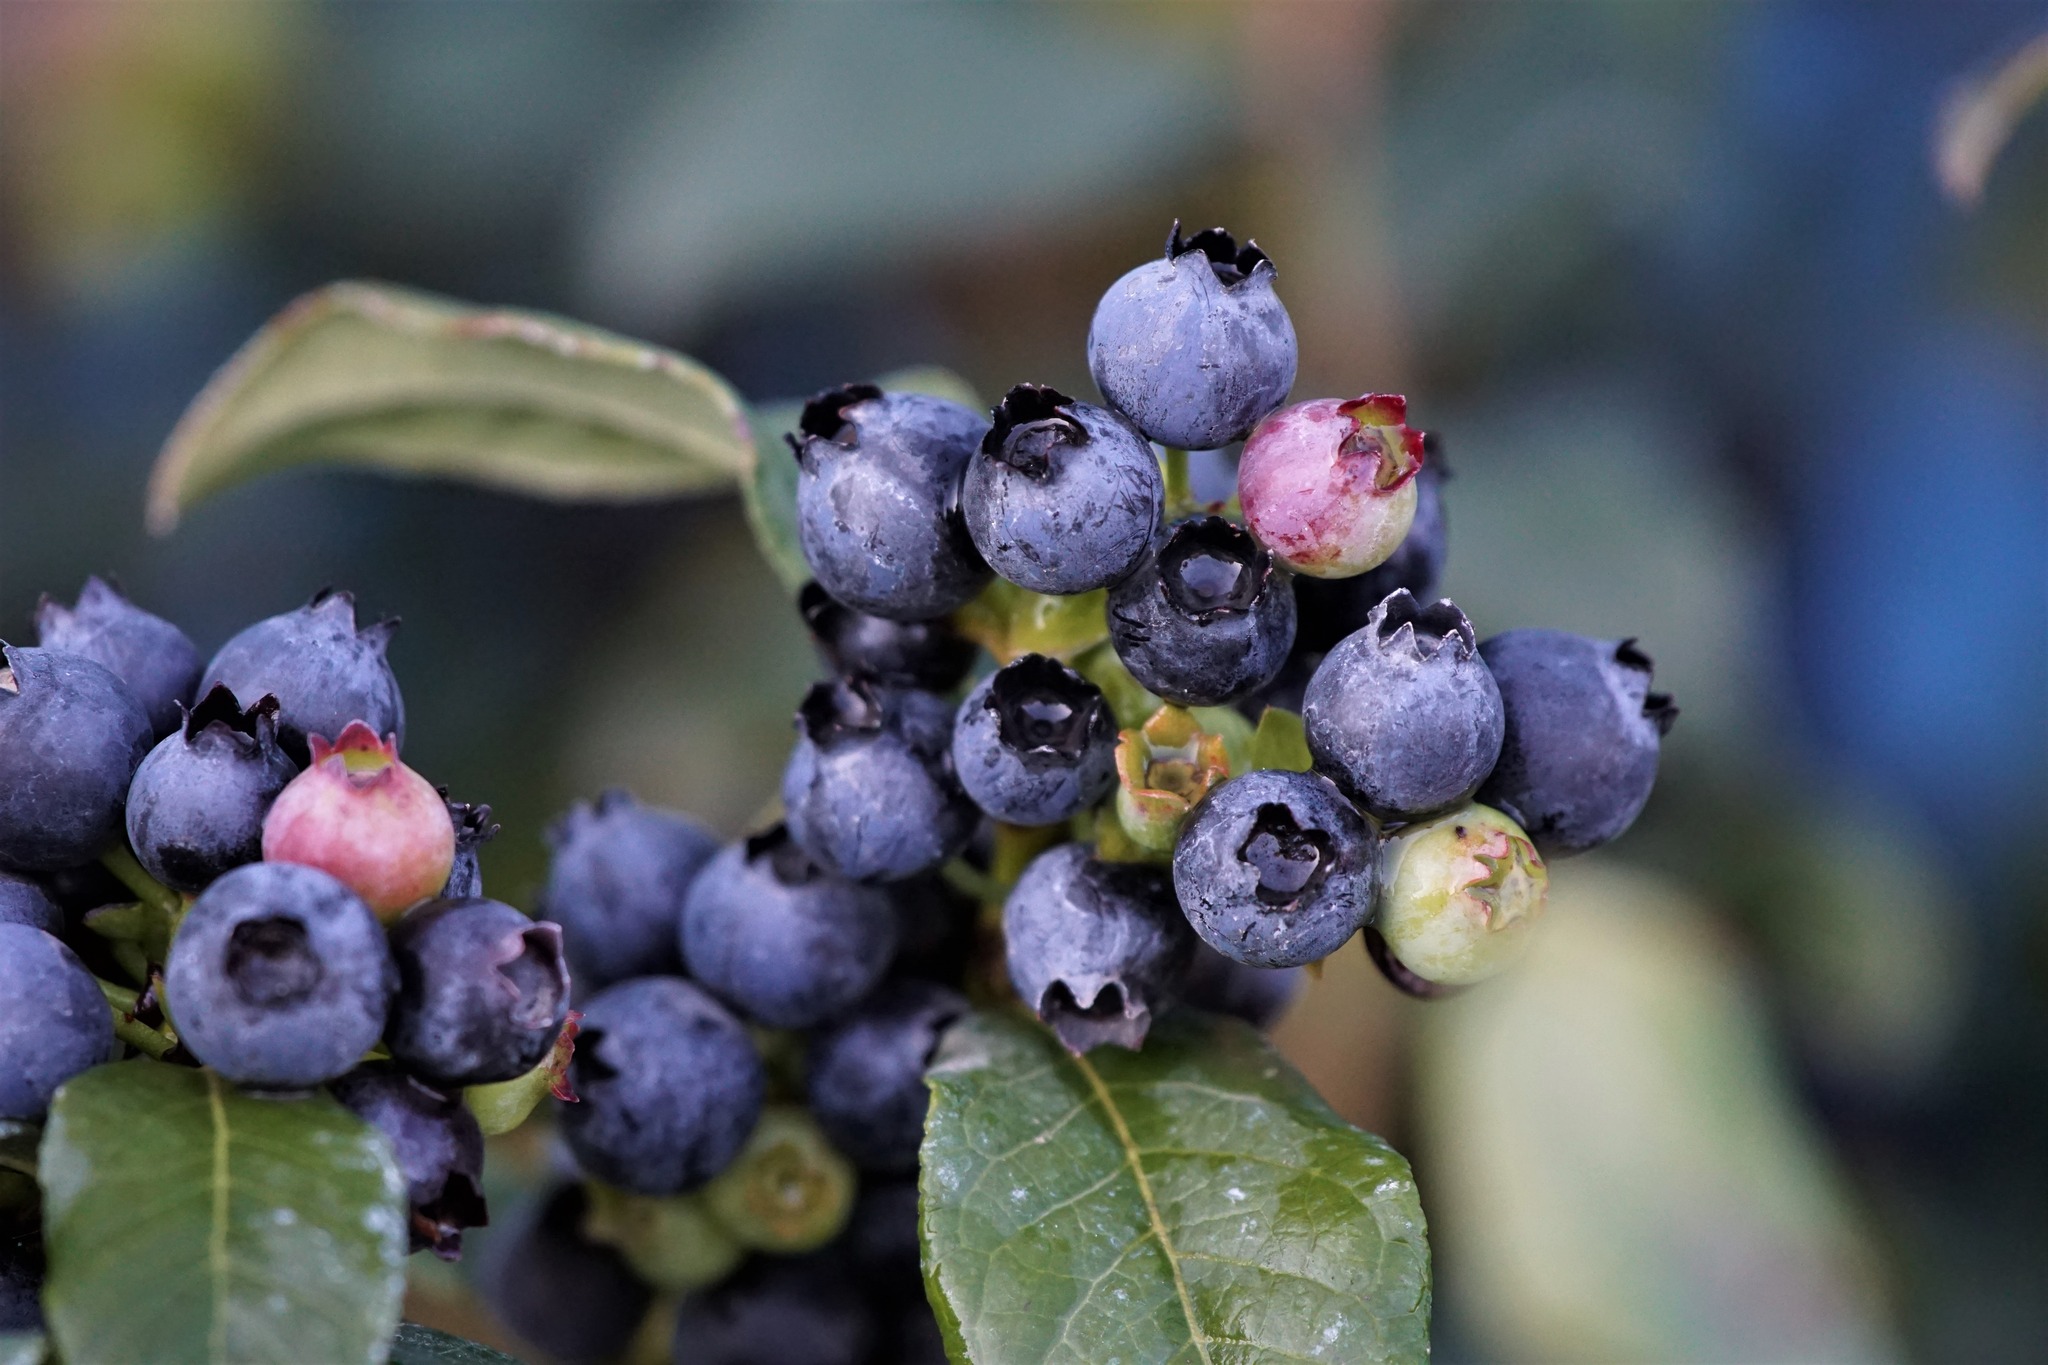 Bushel And Berry Perpetua Blueberry